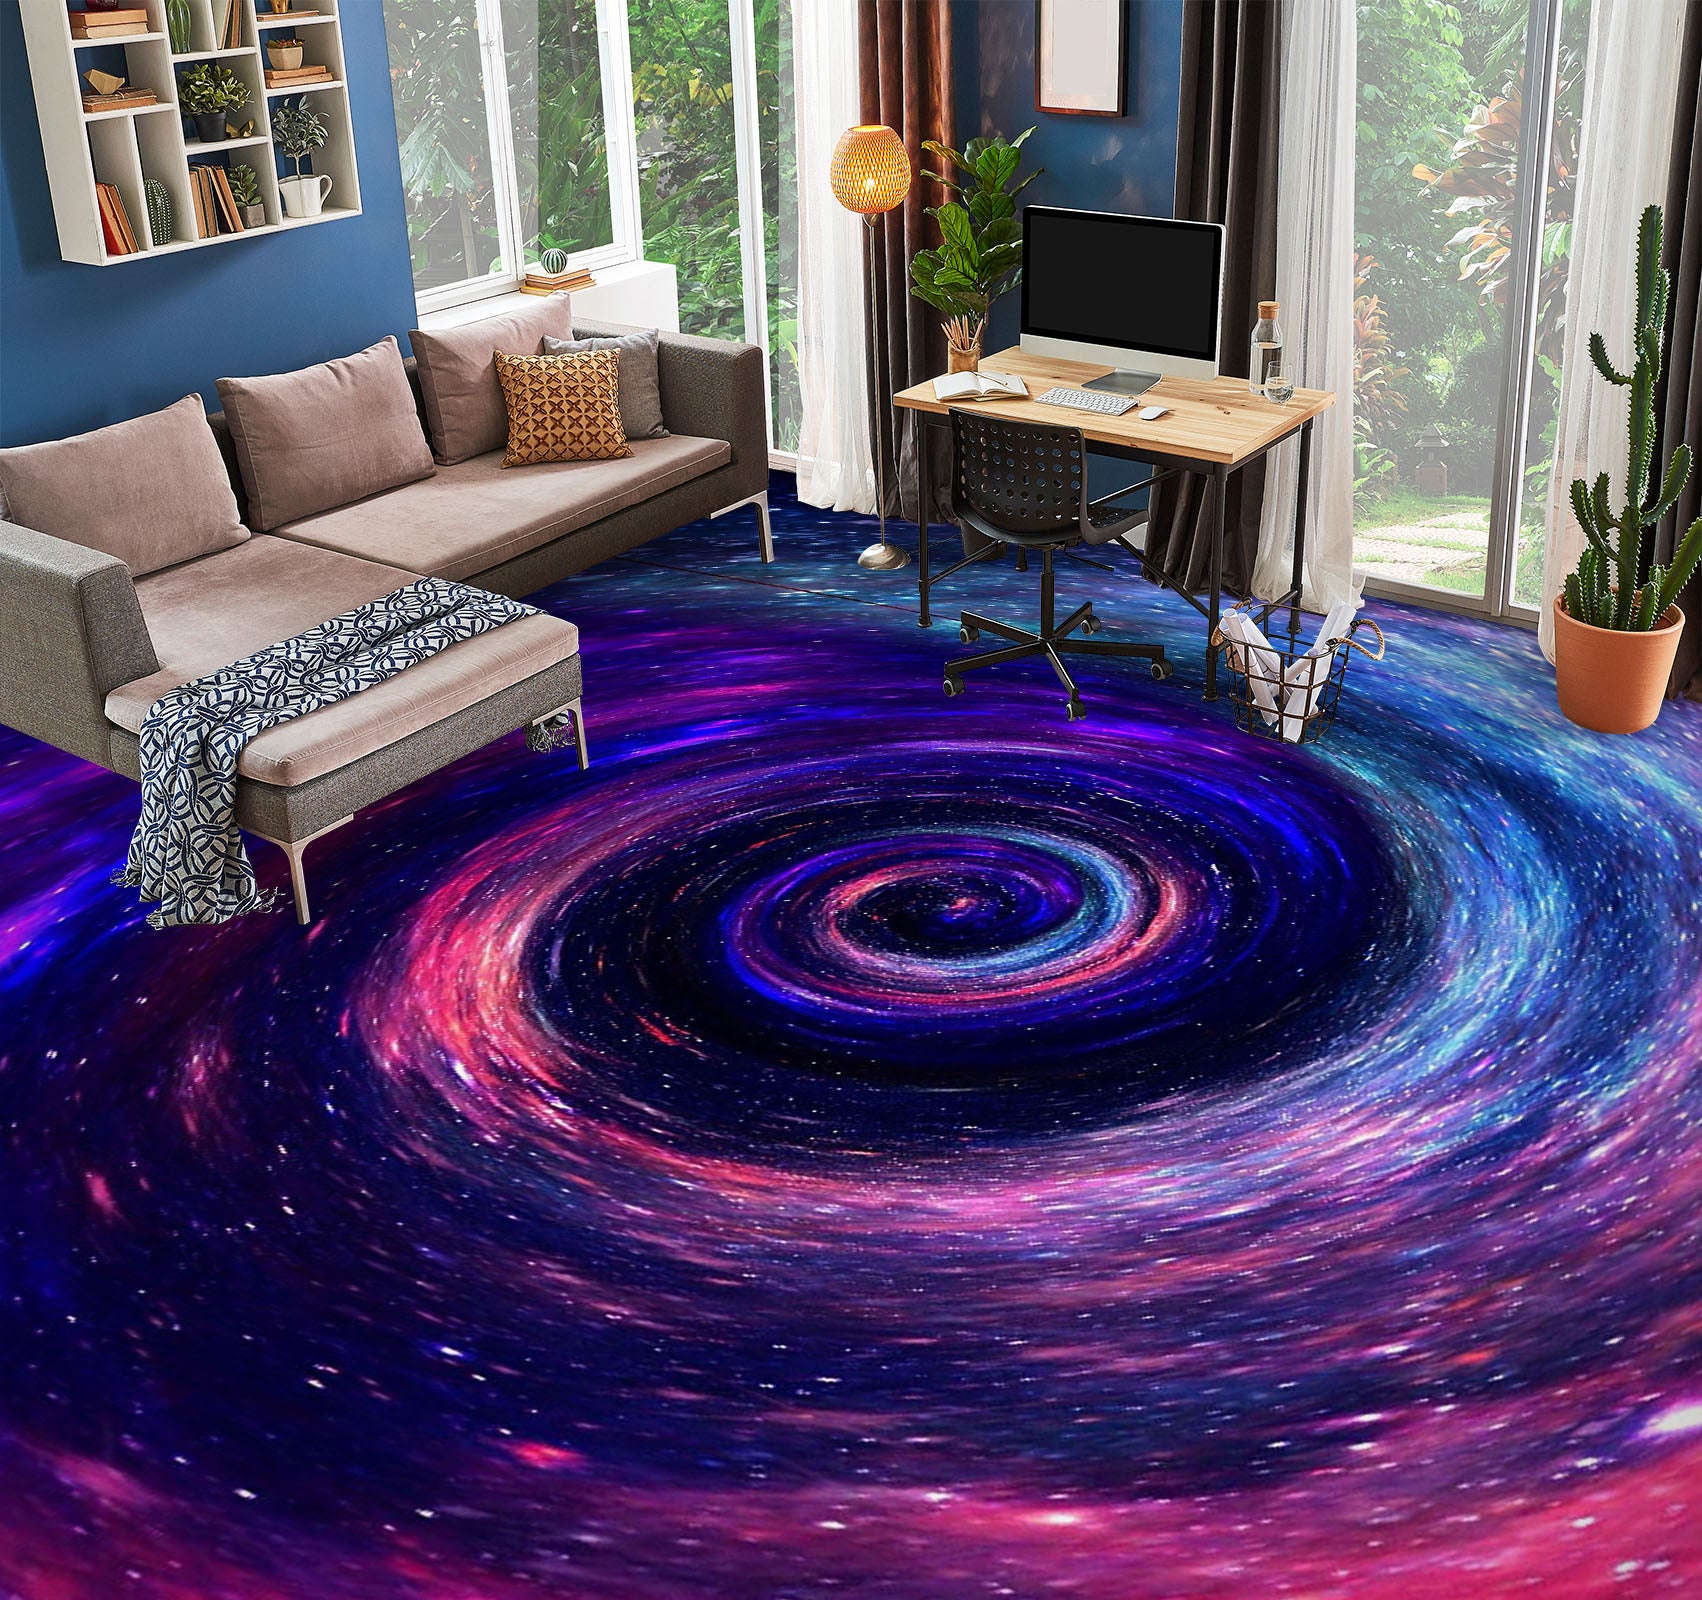 3D Purple Galaxy Swirl 1244 Floor Mural  Wallpaper Murals Self-Adhesive Removable Print Epoxy